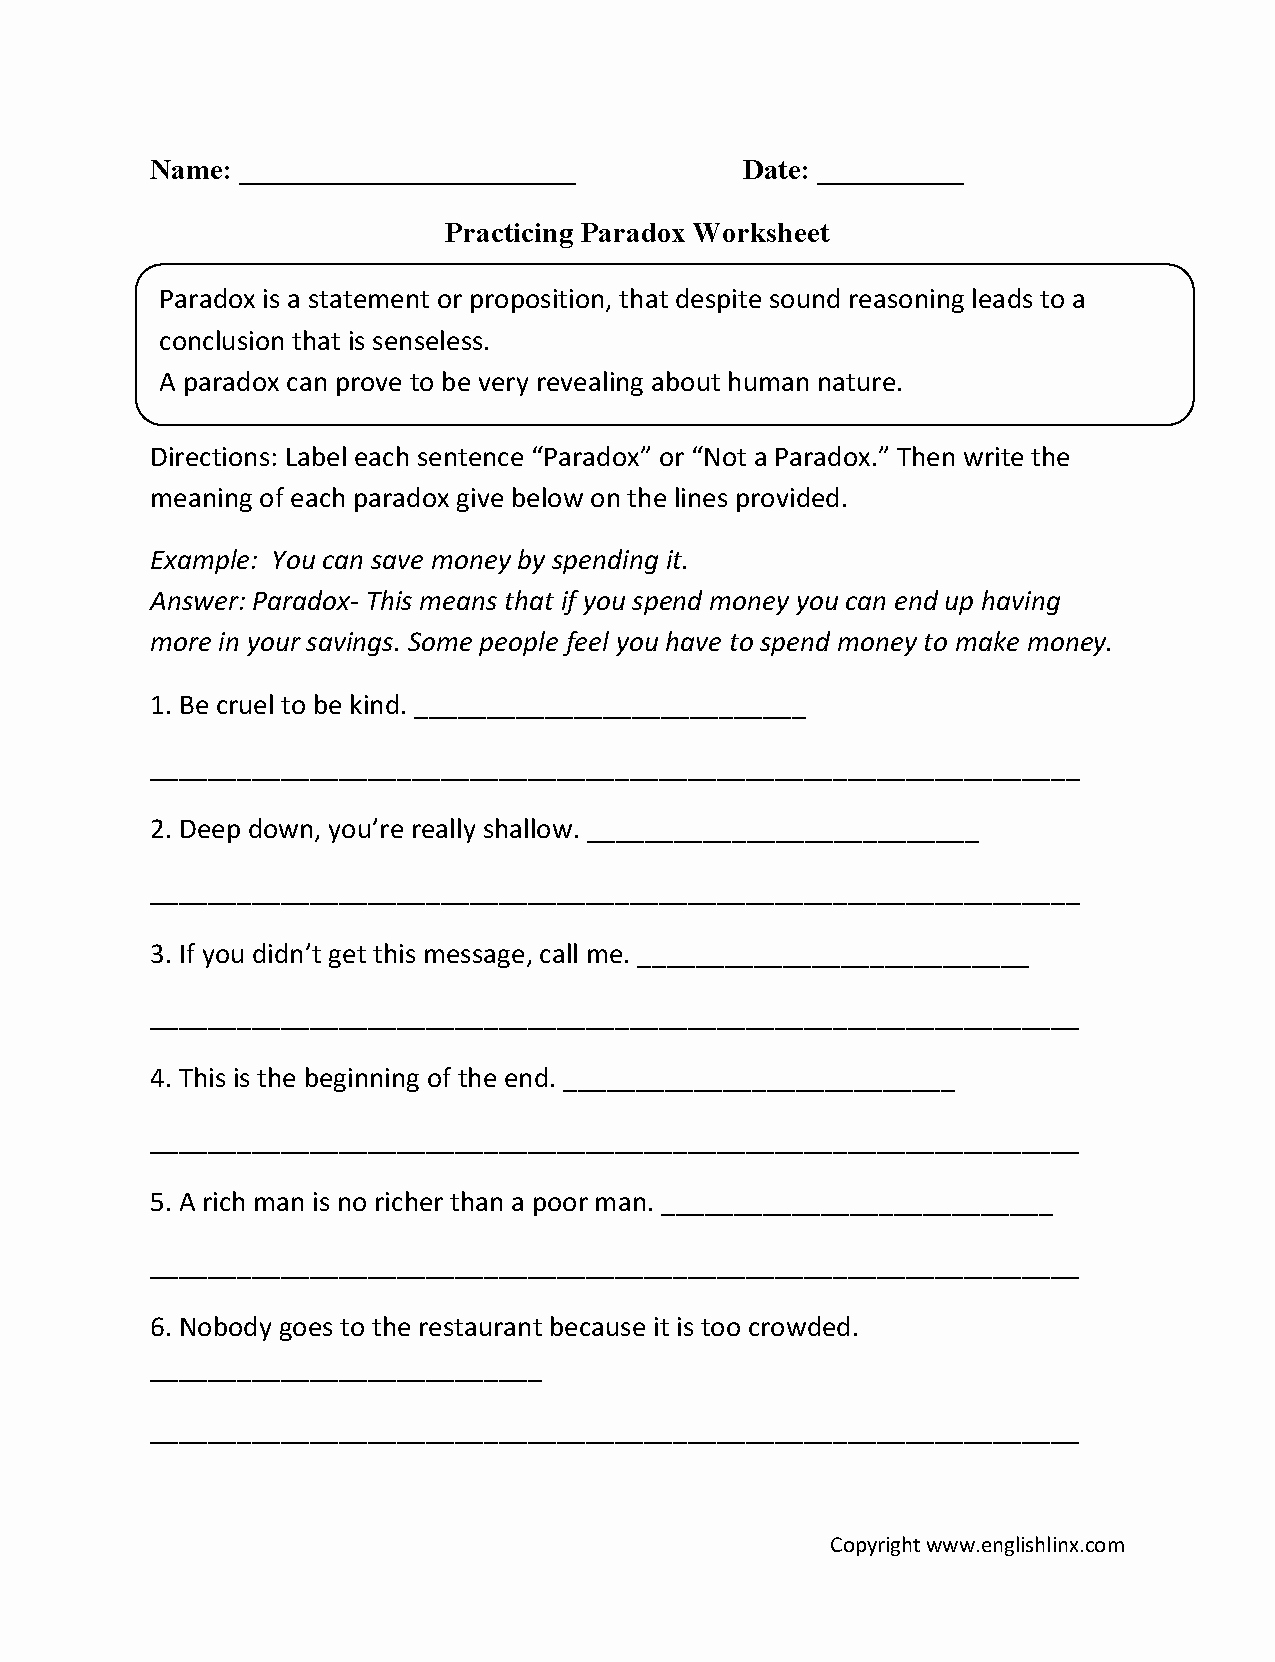 Free Printable Figurative Language Worksheets Best Of Practicing Paradox Worksheet